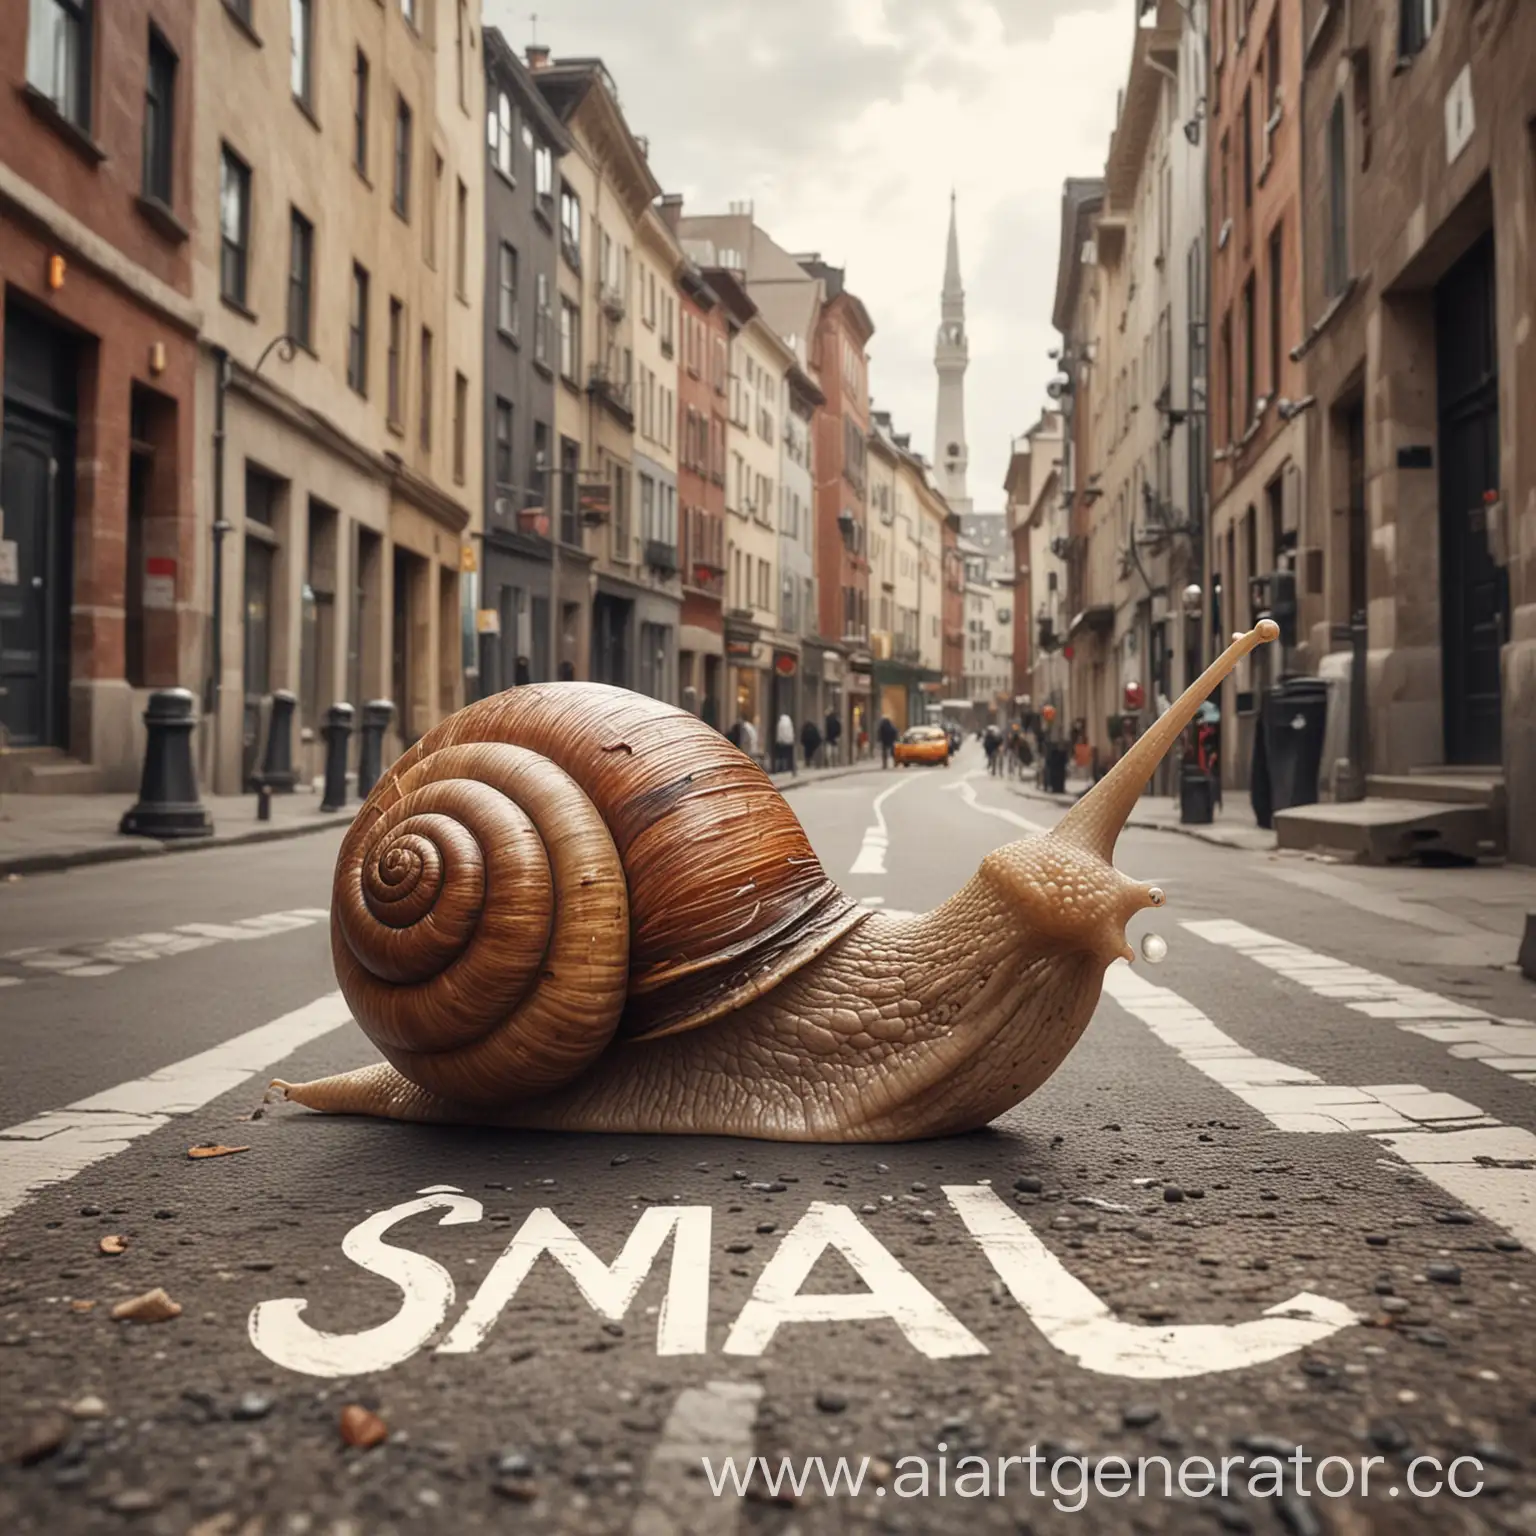 Urban-Snail-Logo-Cityscape-Exploration-with-Unique-Mascot